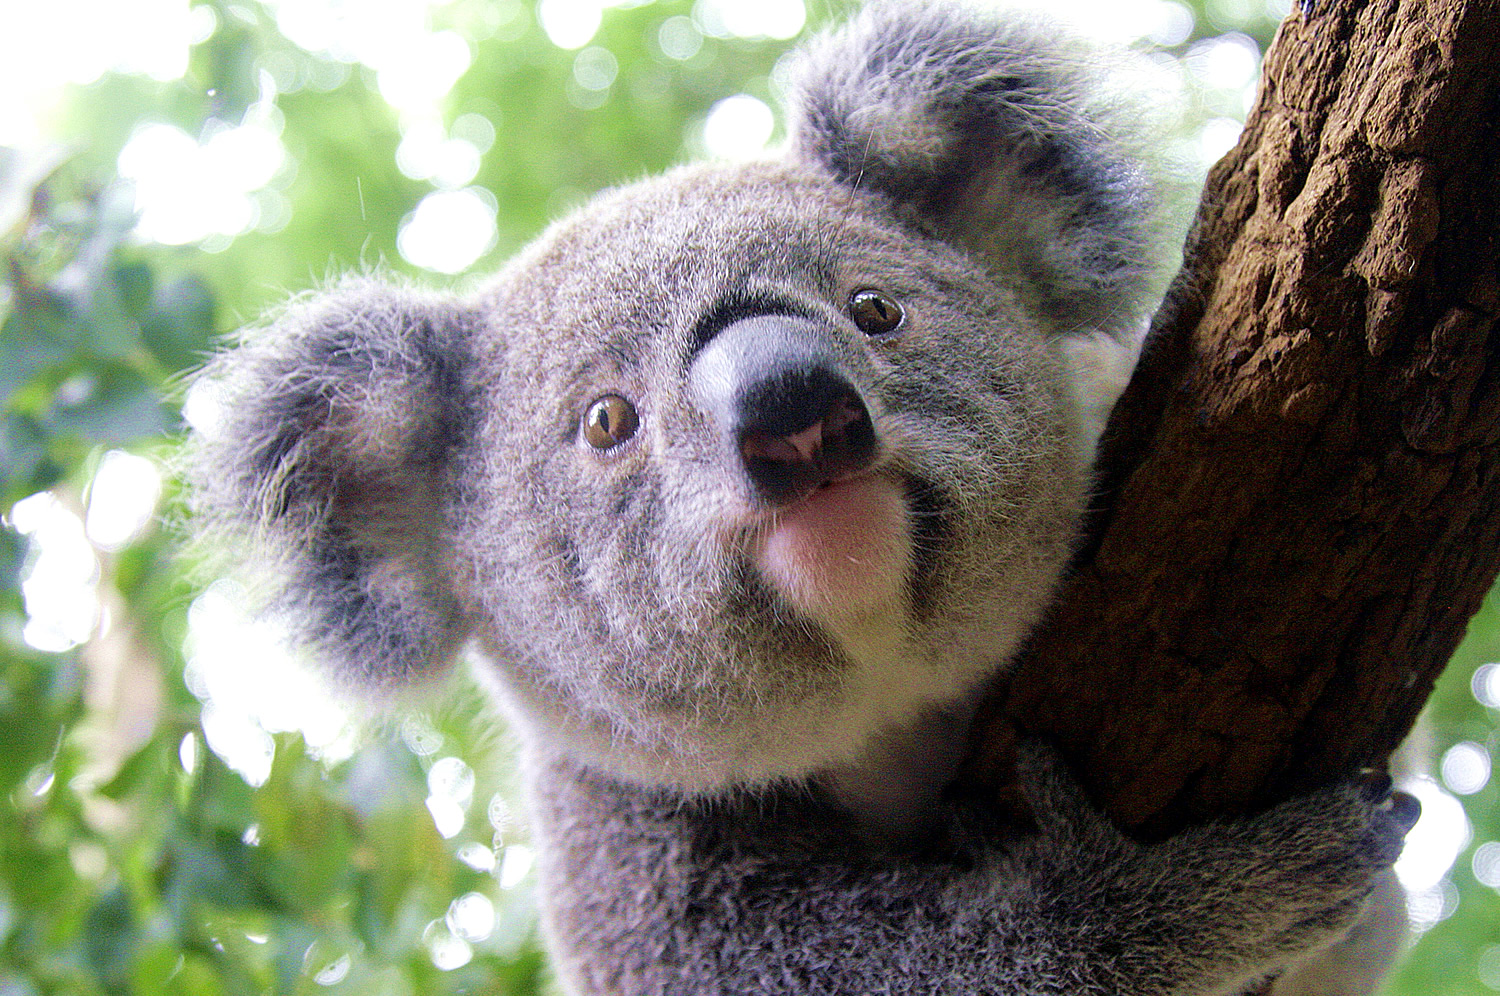 Лоун Пайн коала. Брисбен парк коал. Австралийская коала. Заповедник Lone Pine Koala. Сделай коалу